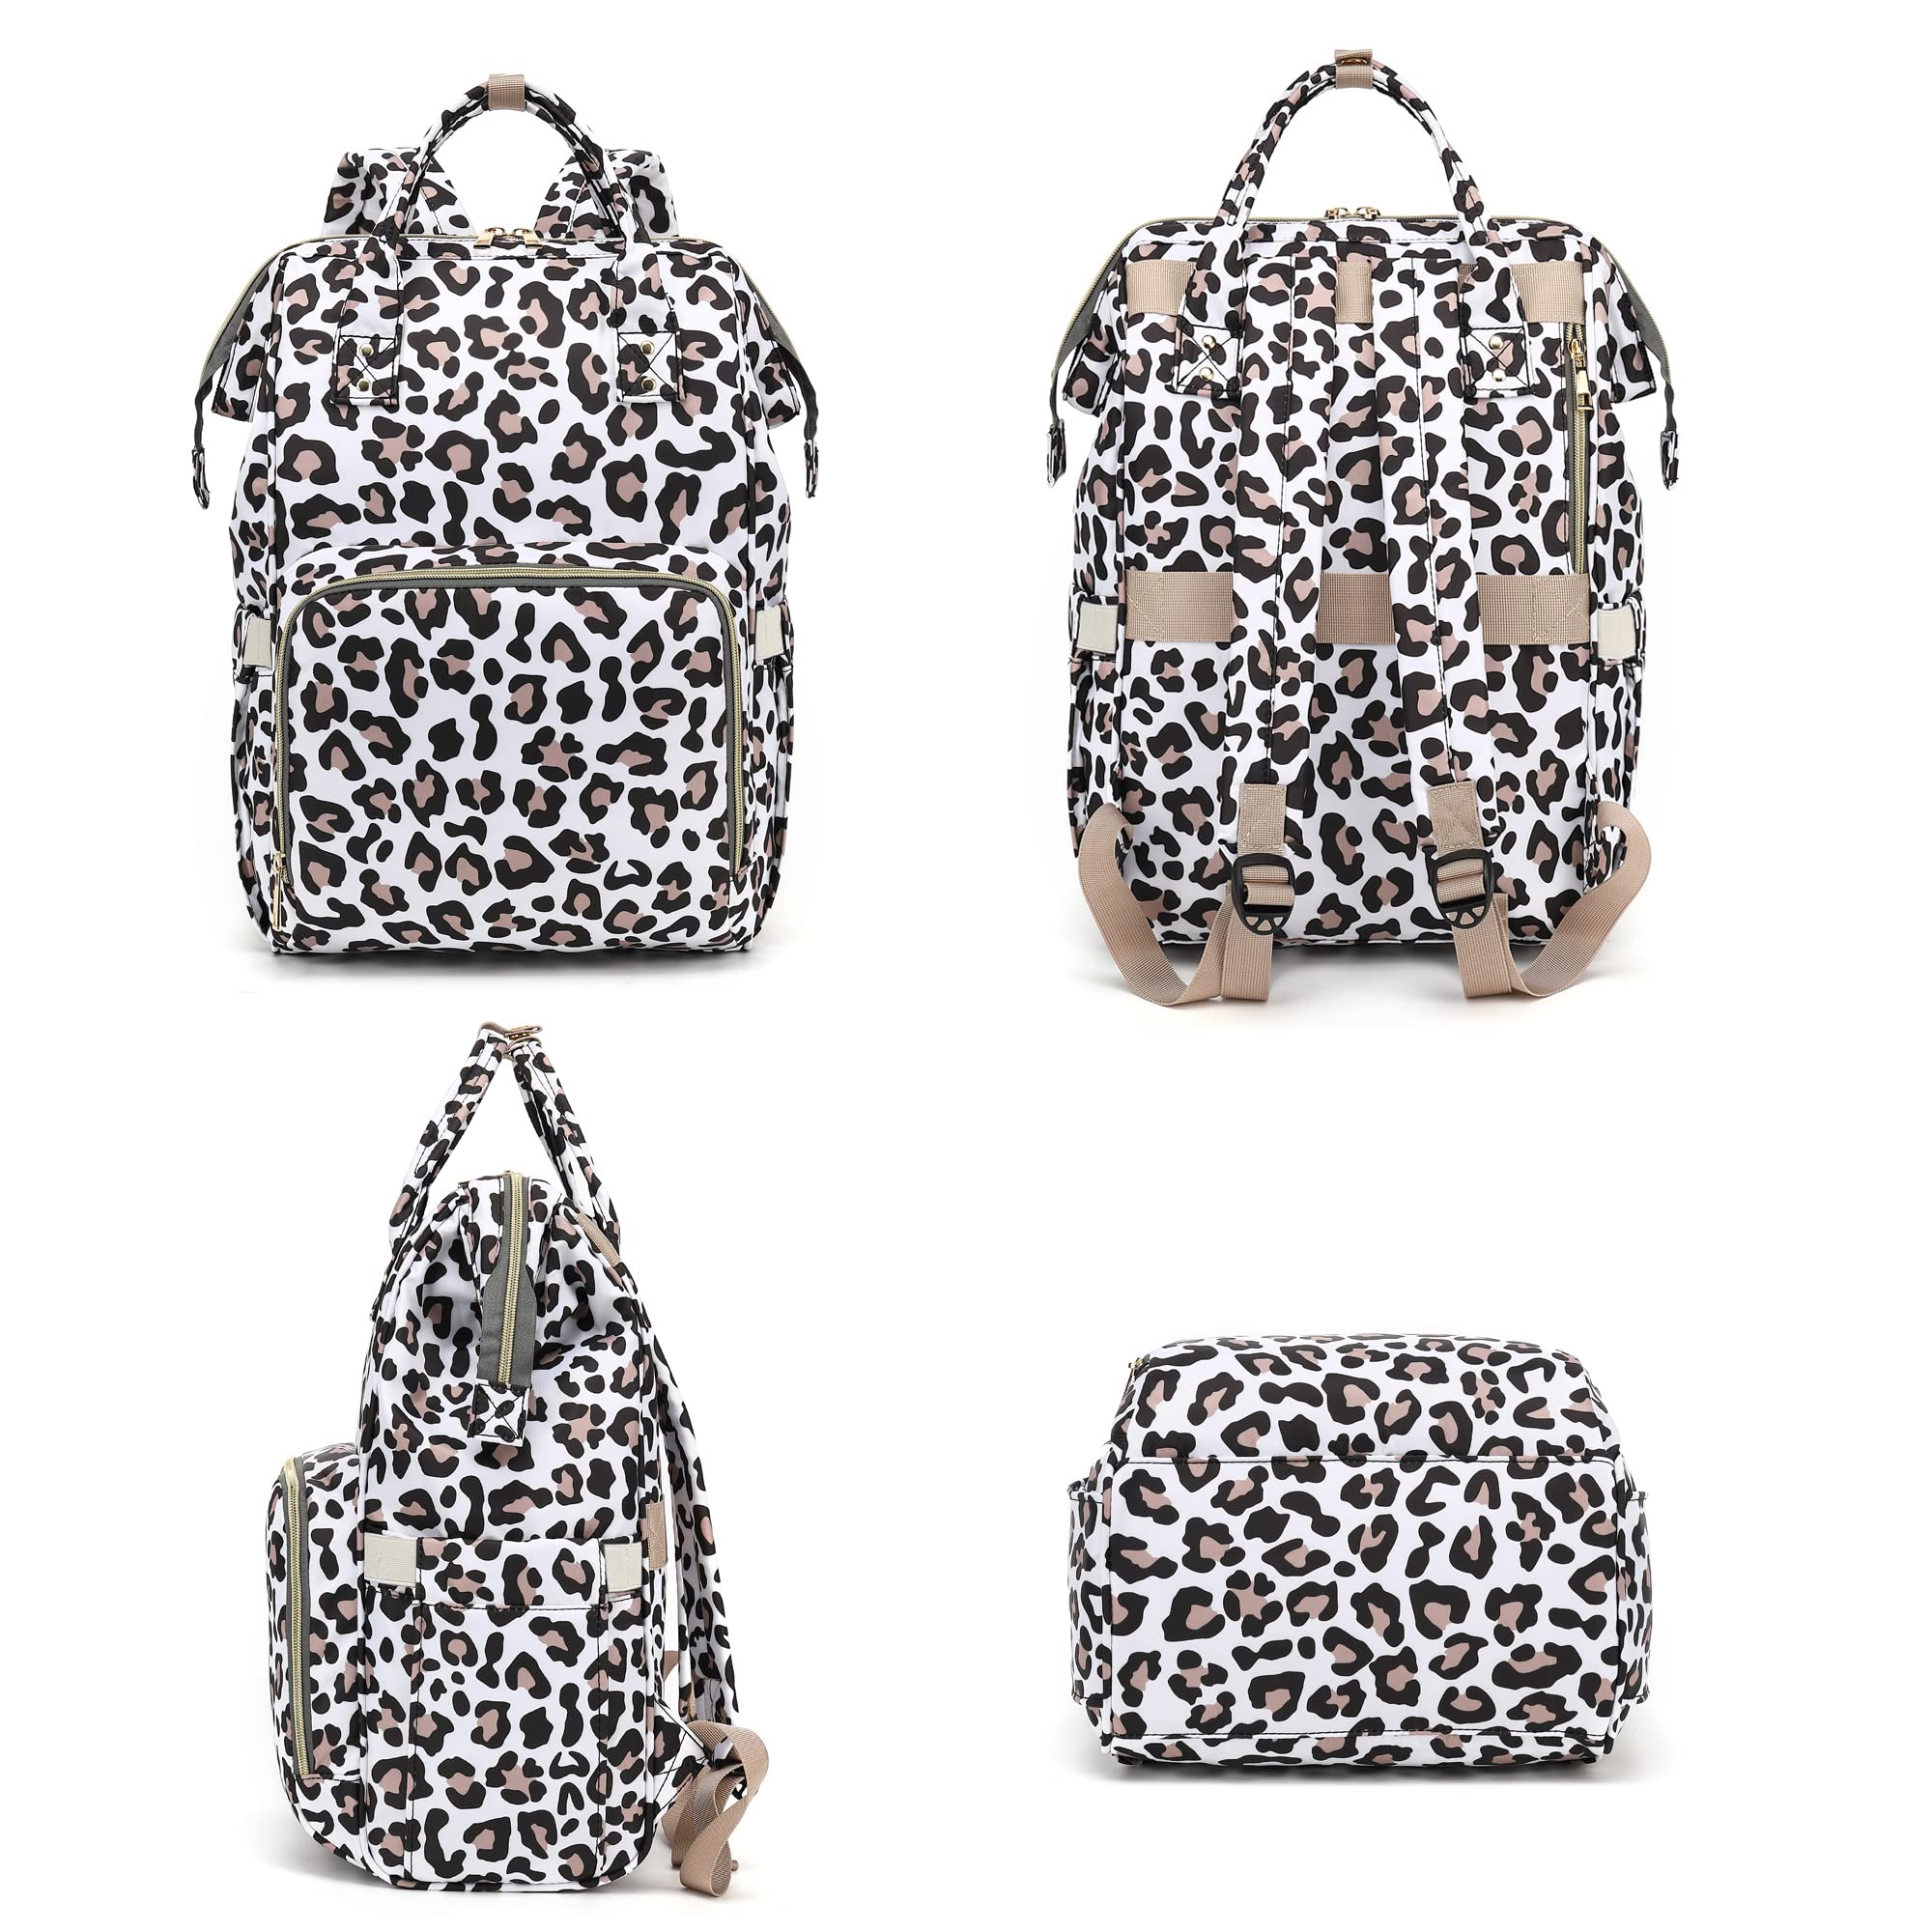 Yusudan Leopard Laptop Backpack for Women Men, 15.6 inch College School Backpack Bookbag for Work/School/Travel/Business